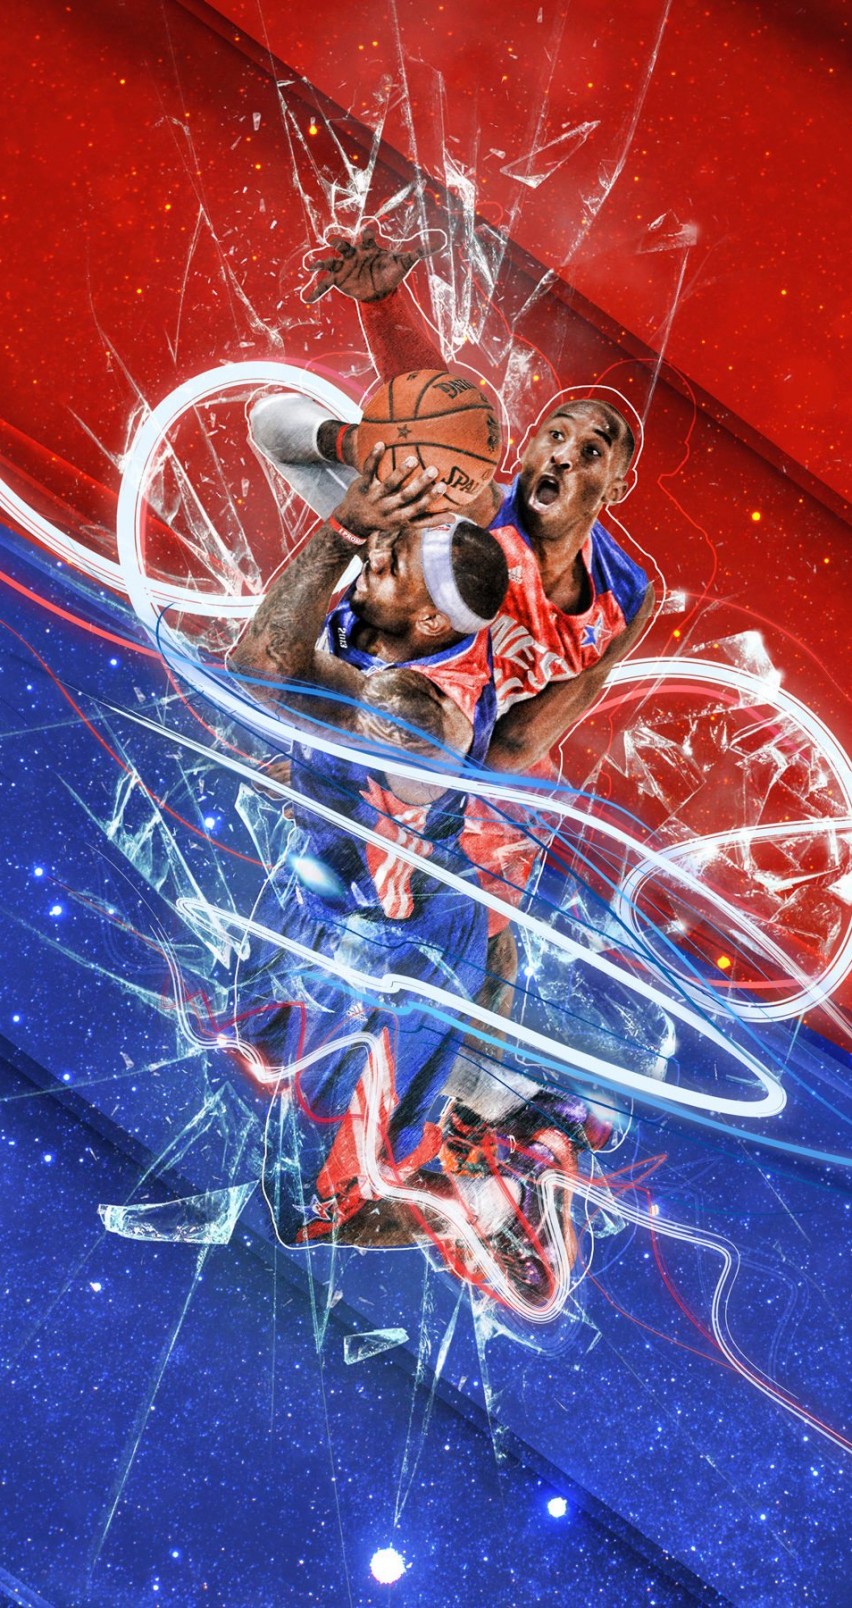 LeBron James Vs Kobe Bryant - NBA - Basketball Wallpaper for Apple iPhone 6 / 6s